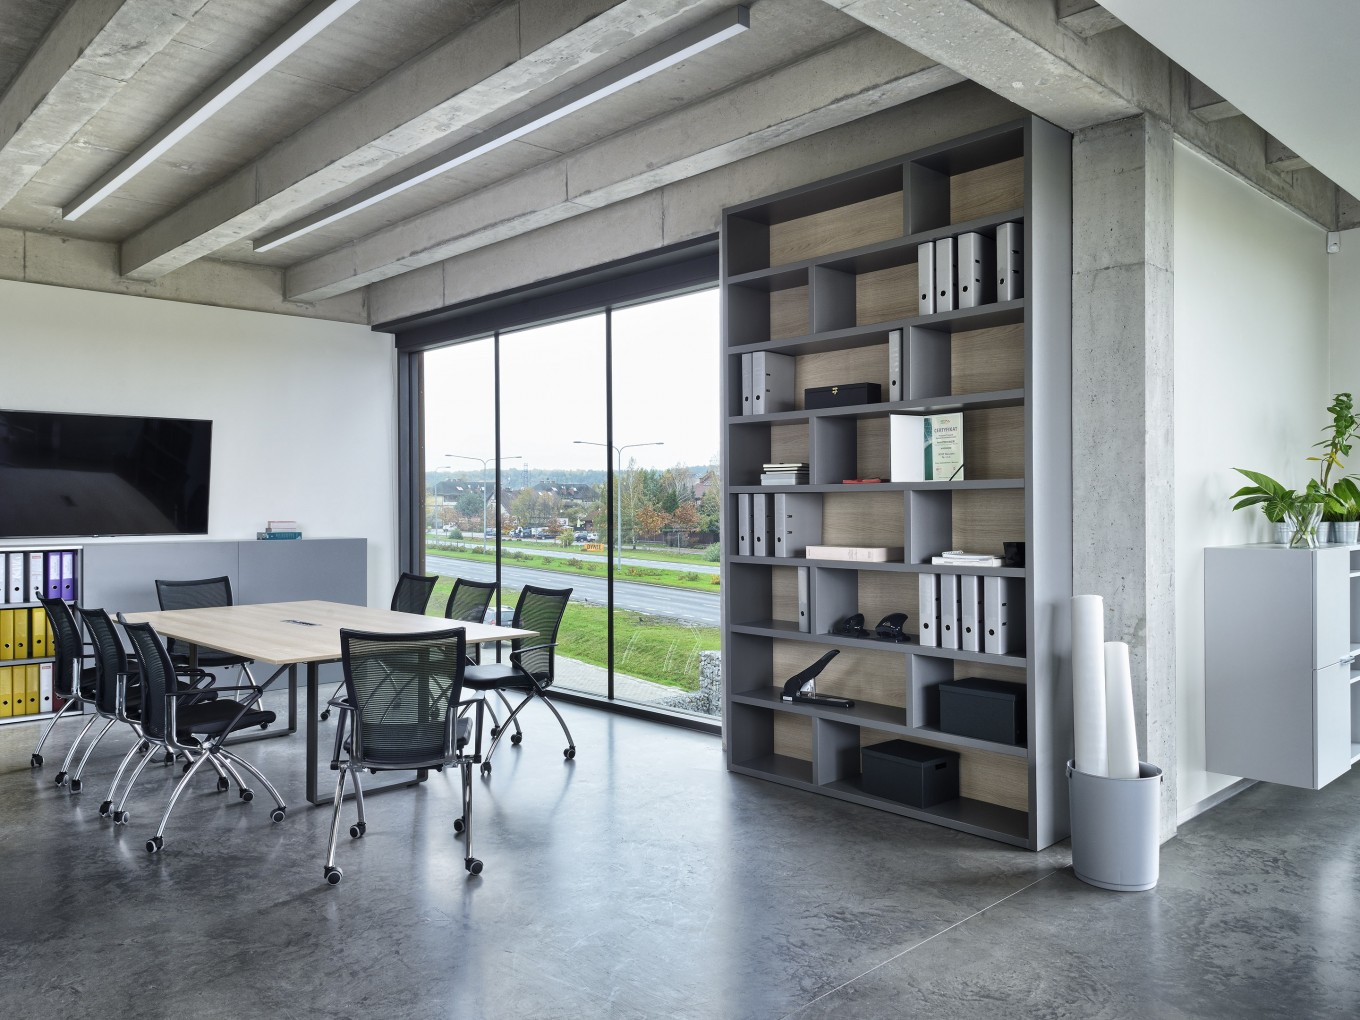 Projekt wnętrza biuro 1000 m2 INTOP OFFICE :: JMSA - biuro architektoniczne, architekci Magdalena Ignaczak, Jacek Kunca